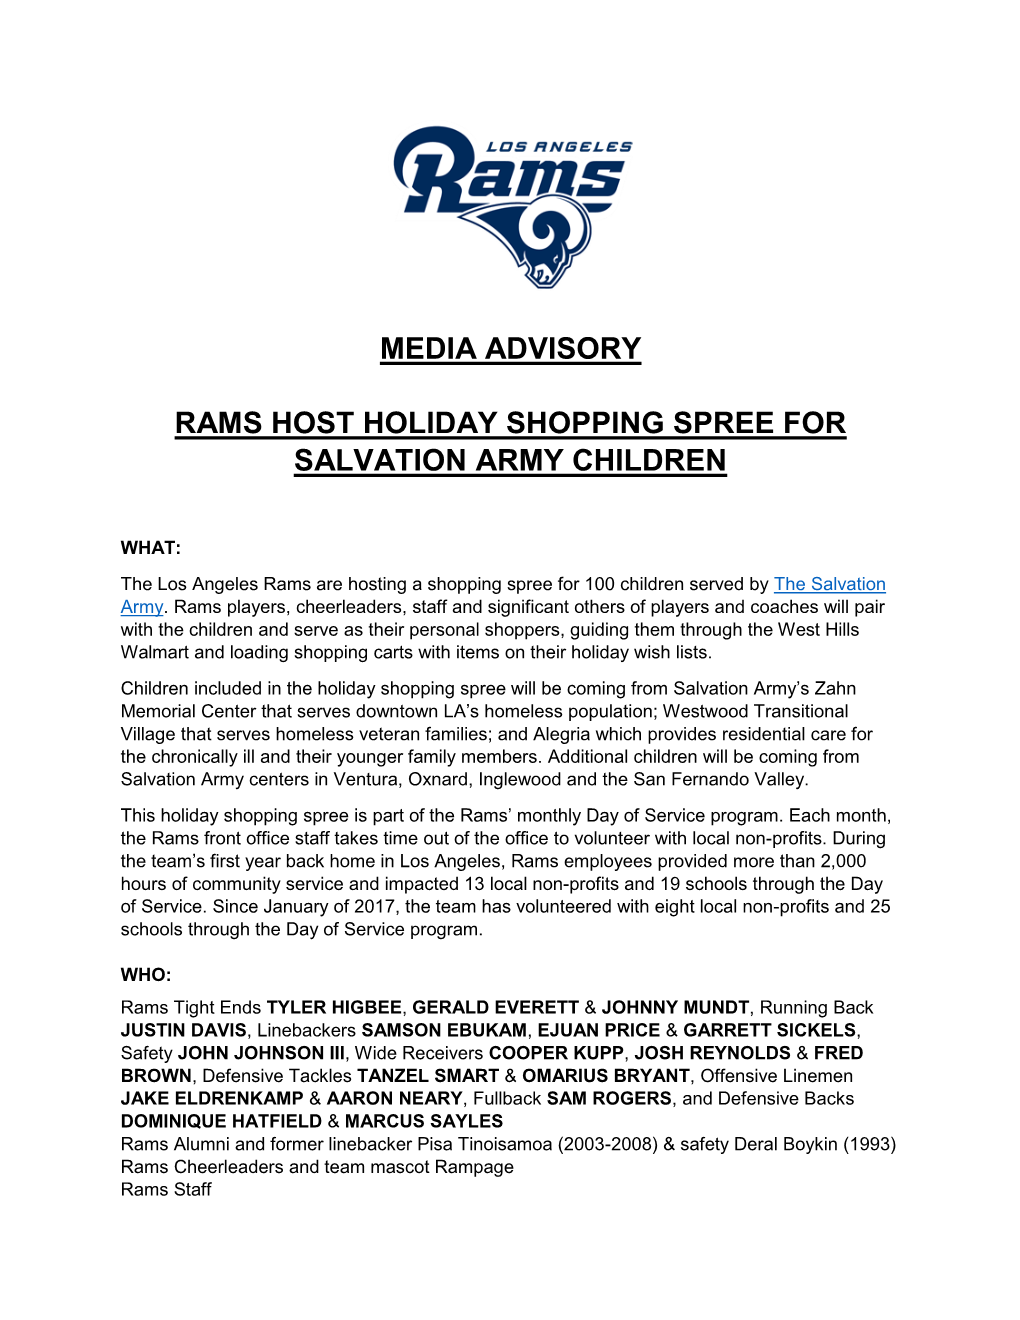 Media Advisory Rams Host Holiday Shopping Spree for Salvation Army Children